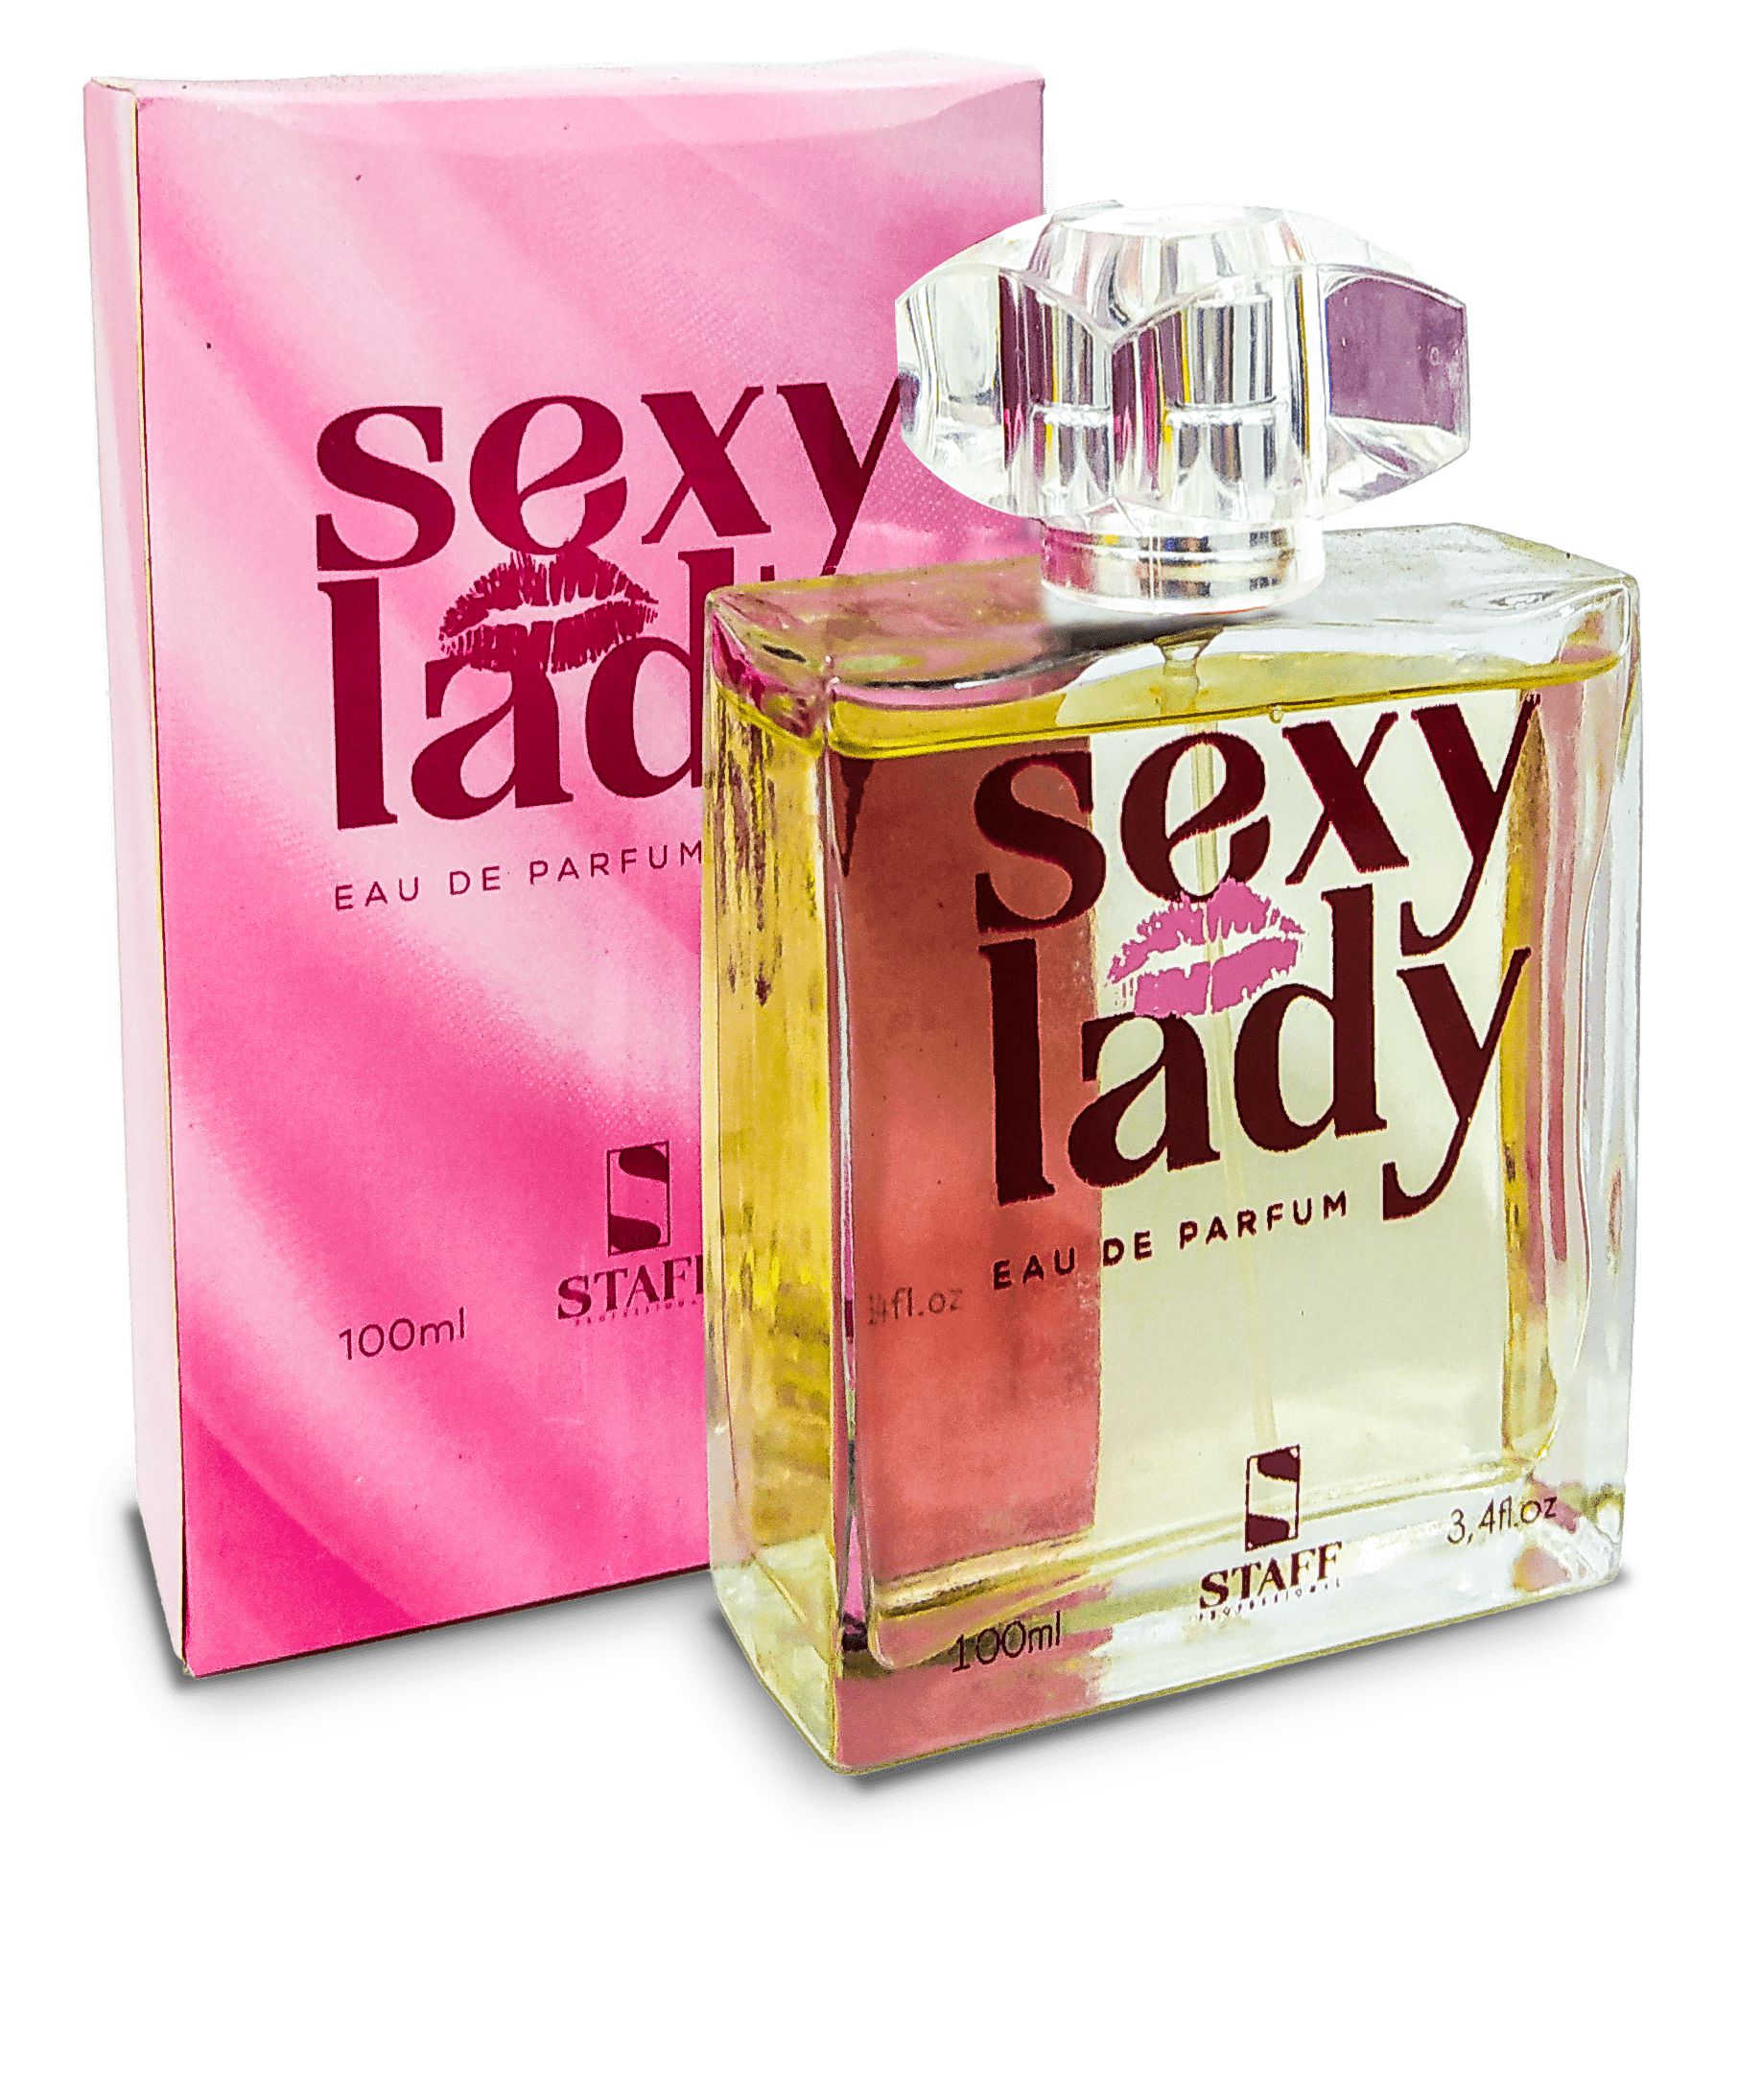 Sexy Lady Eau de Parfum 100ml - Quality Beauty